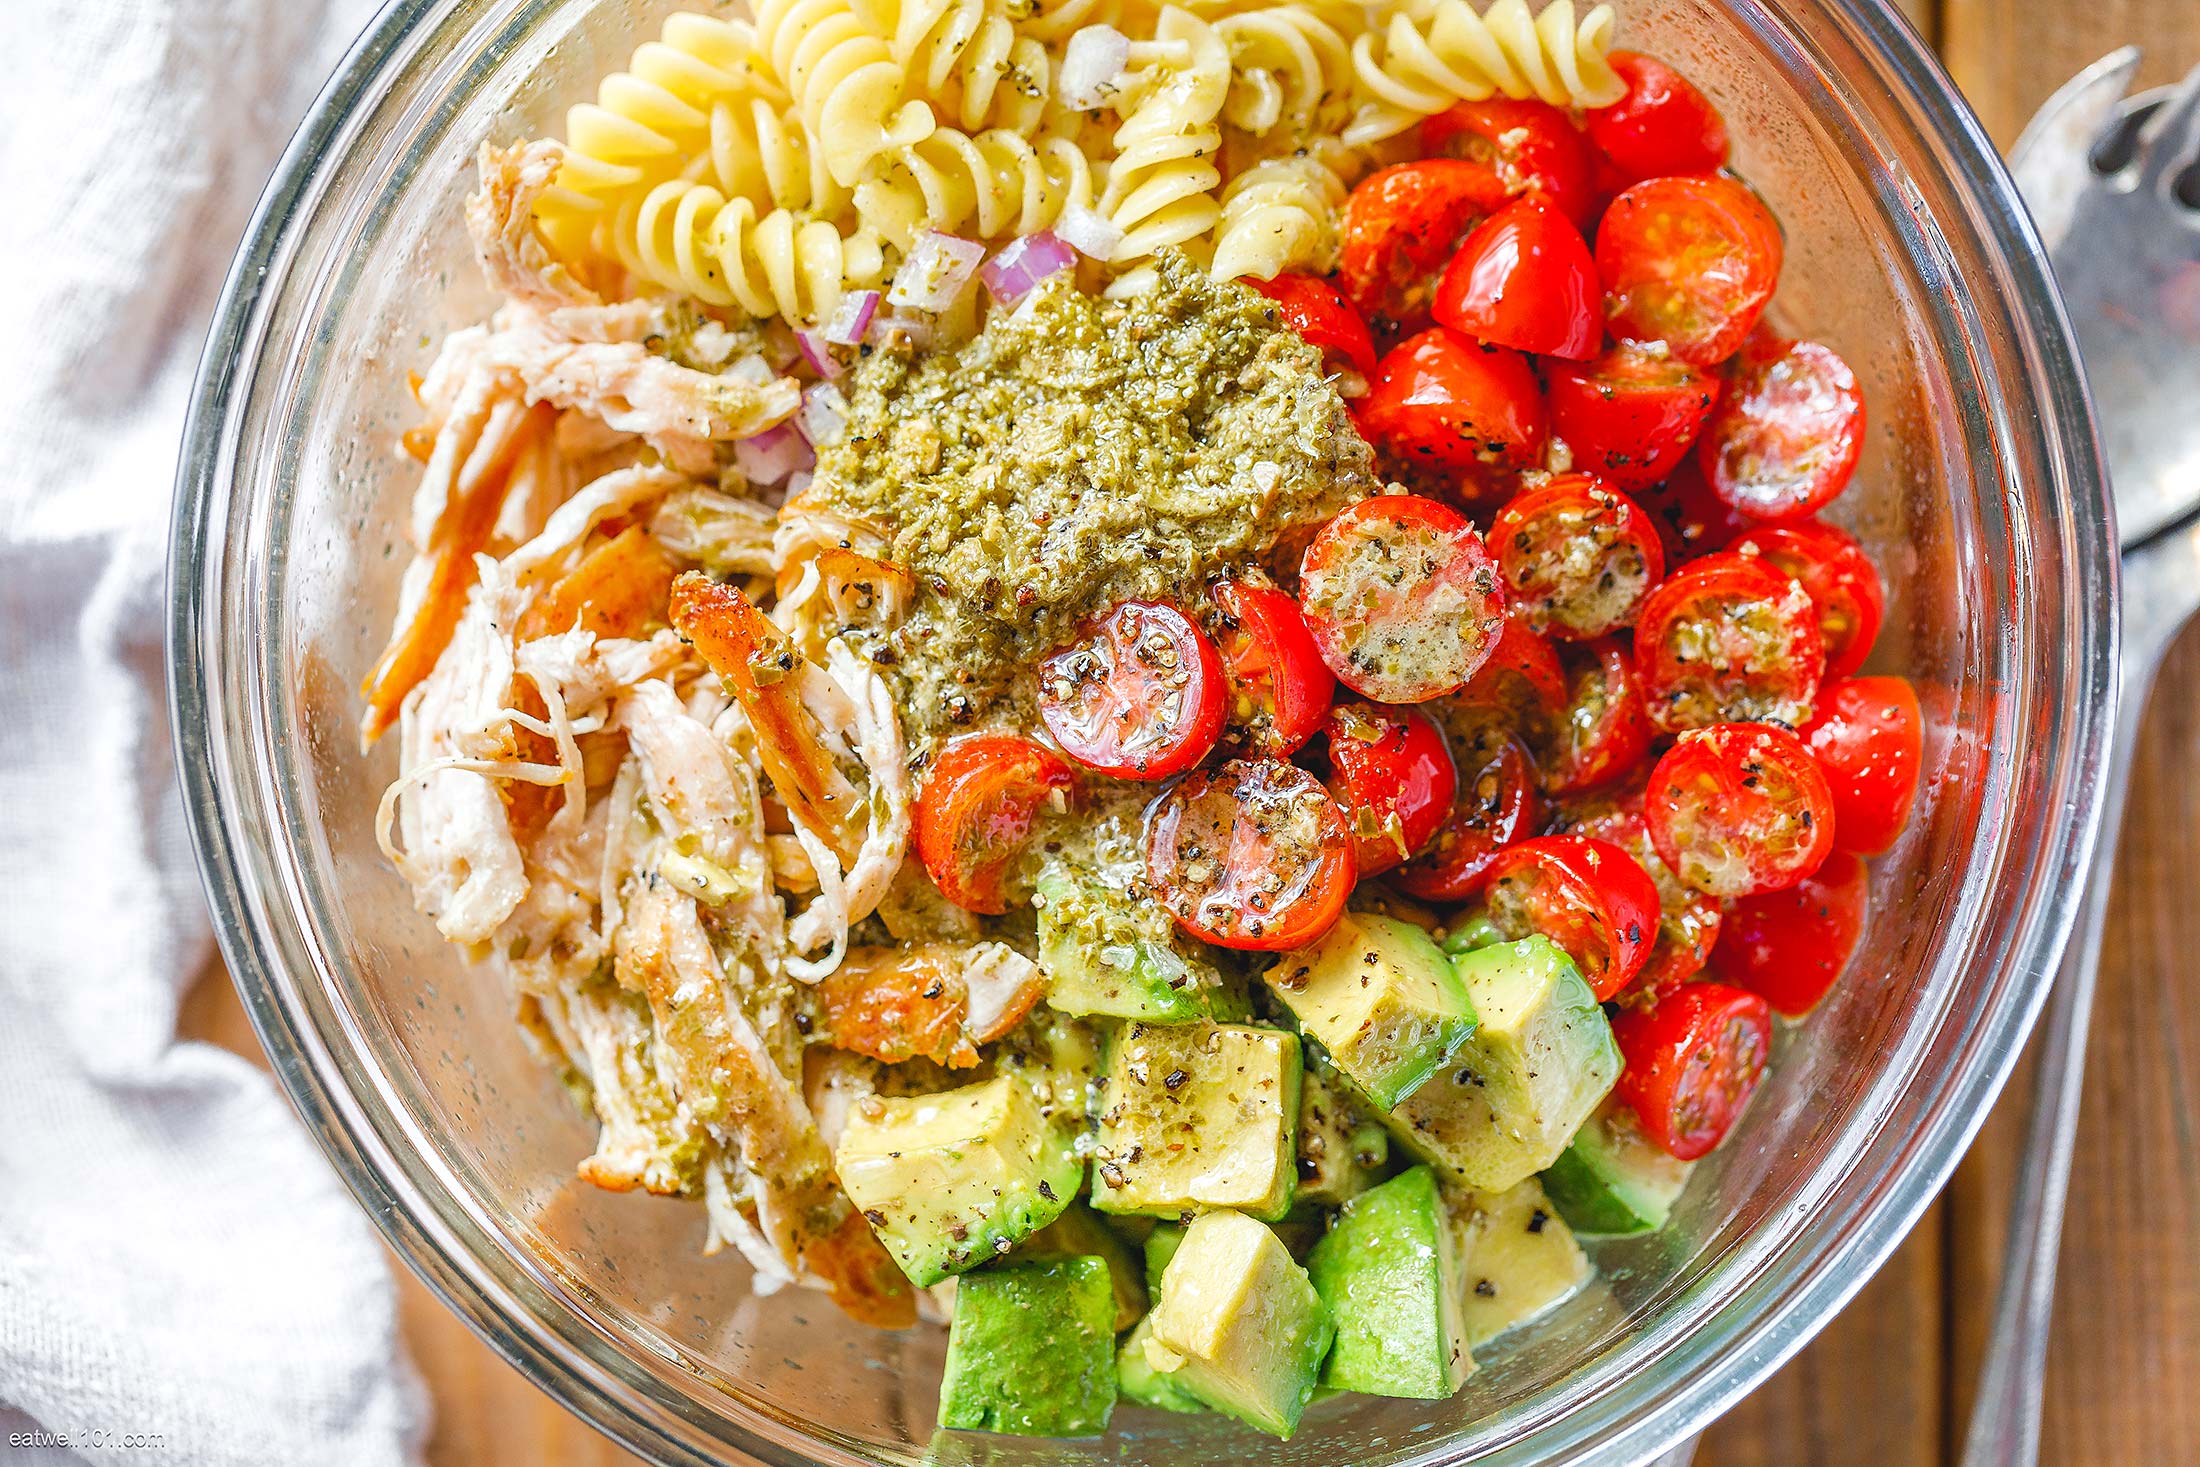 Healthy Chicken Pasta Salad with Pesto, Avocado, and Tomato